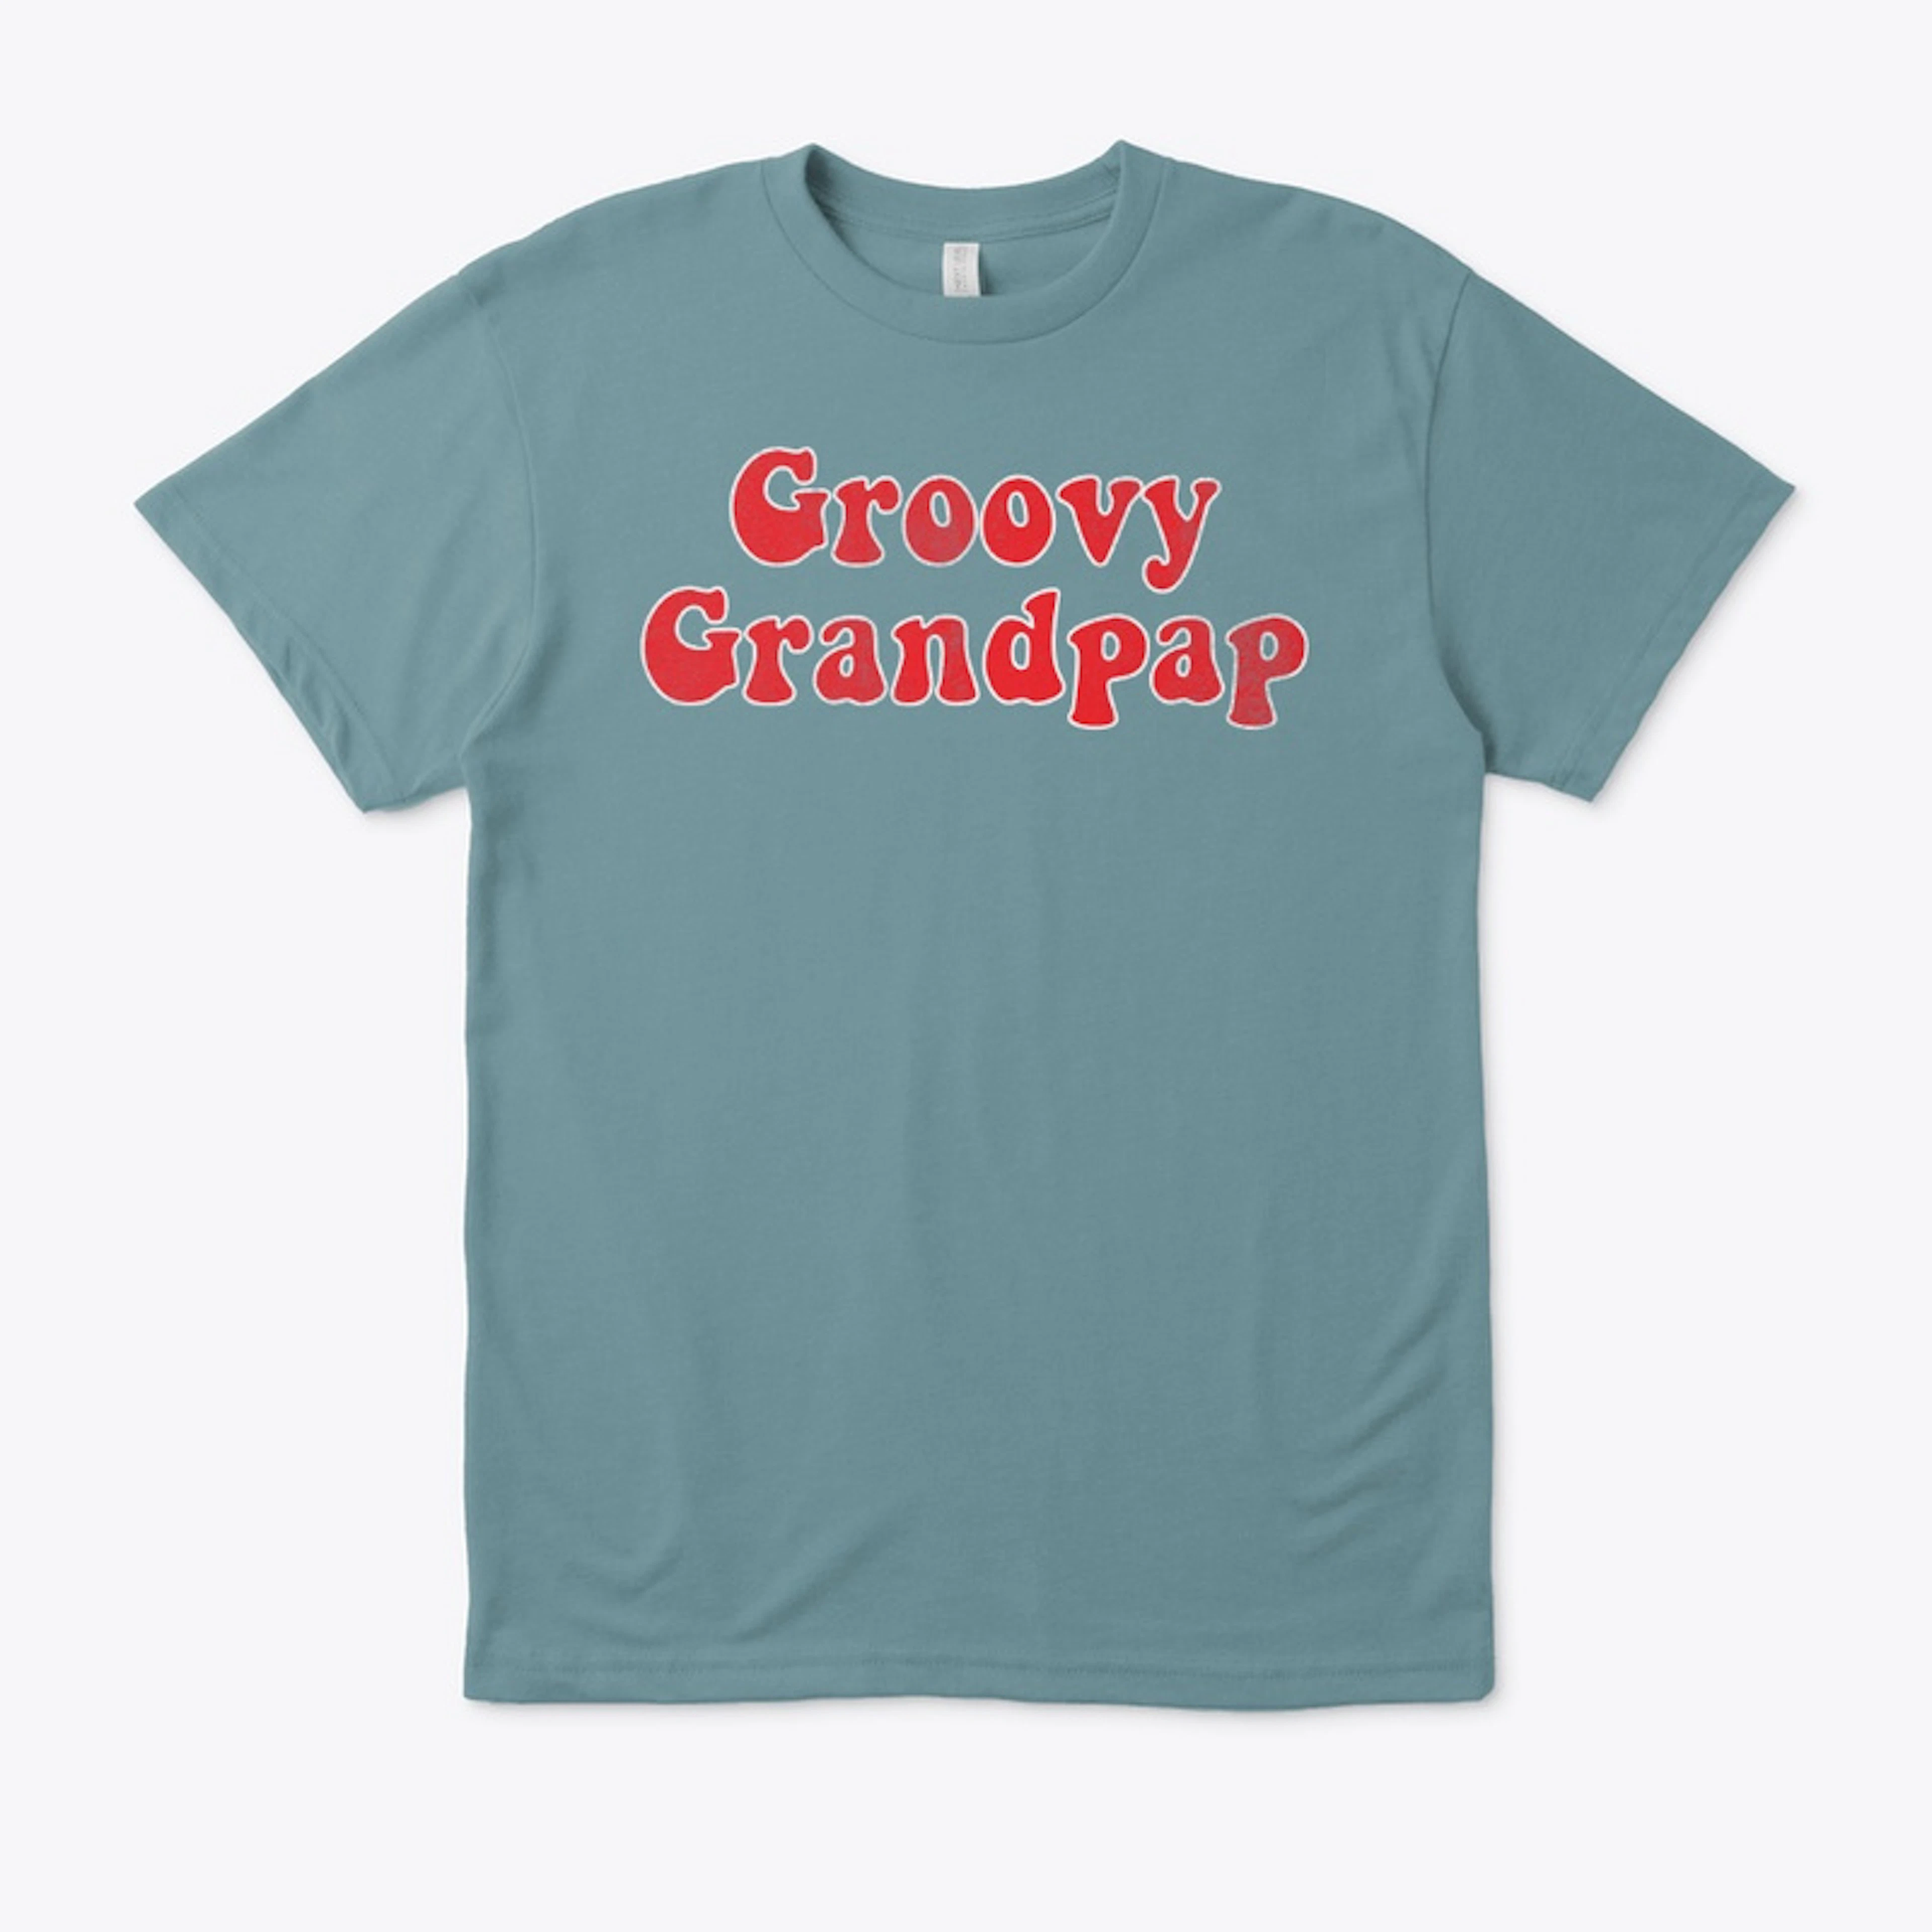 Groovy Grandpap